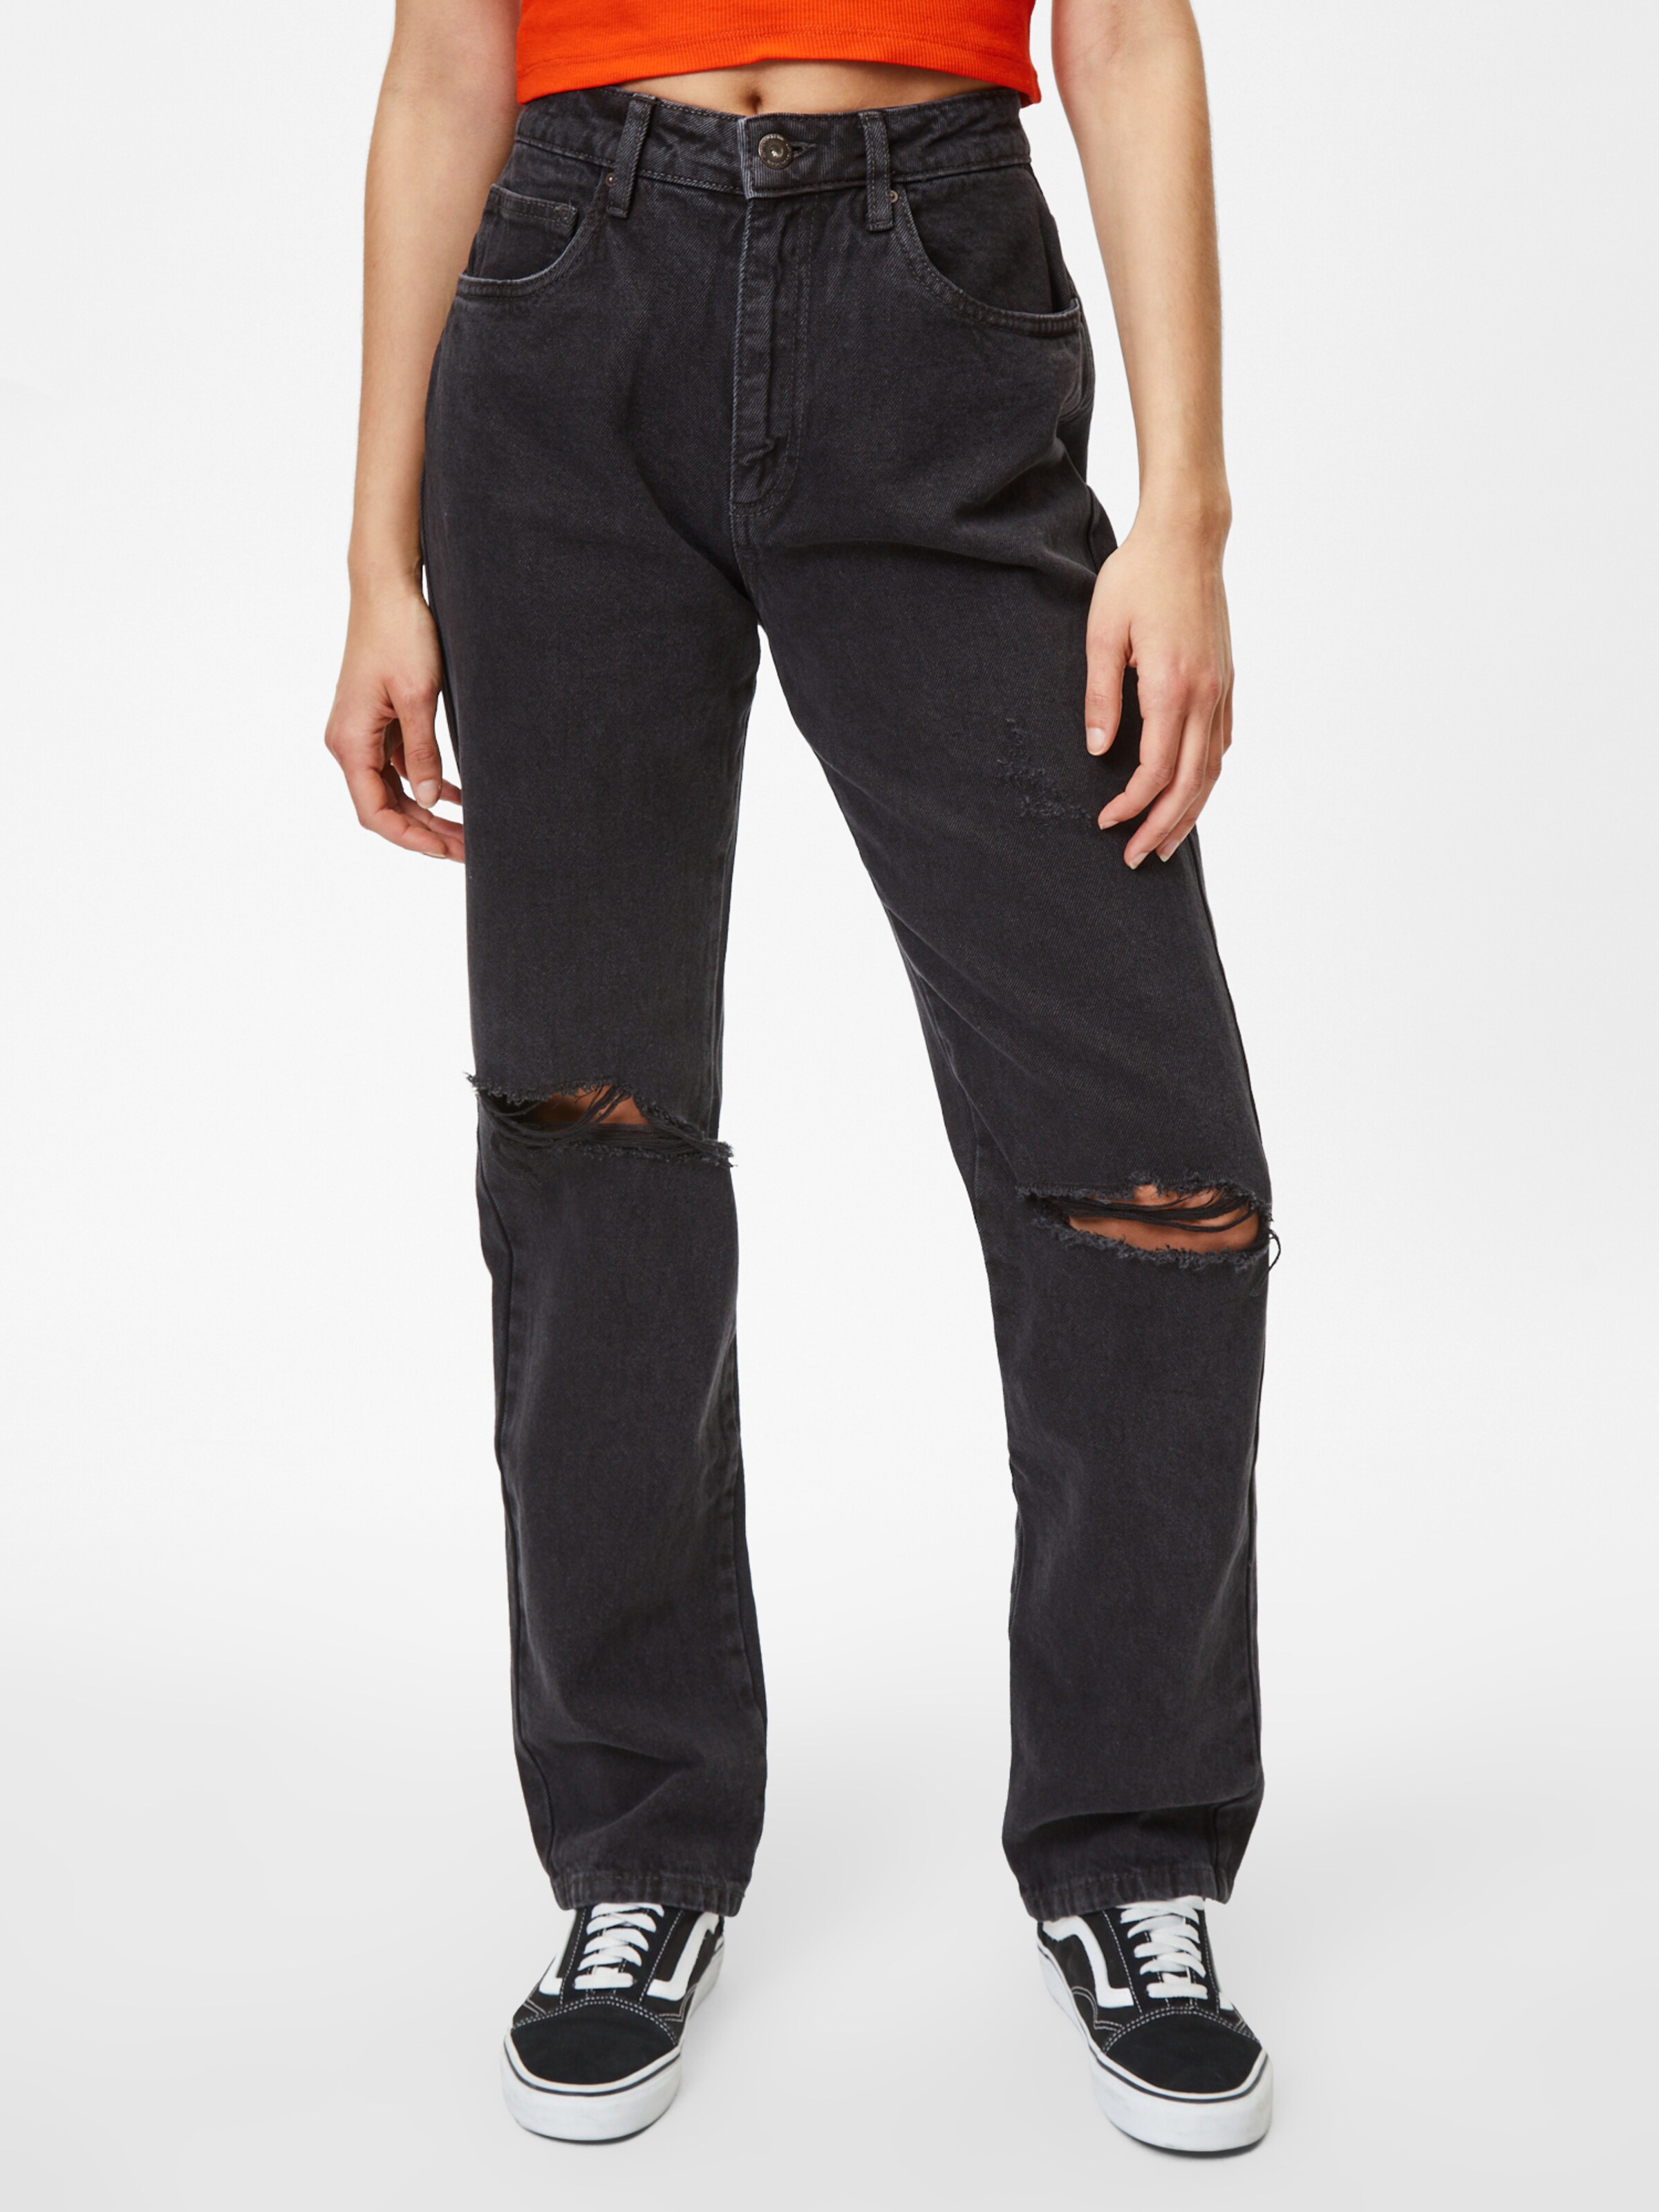 Frauen Jeans Cotton On Jeans in Graphit - RK88417